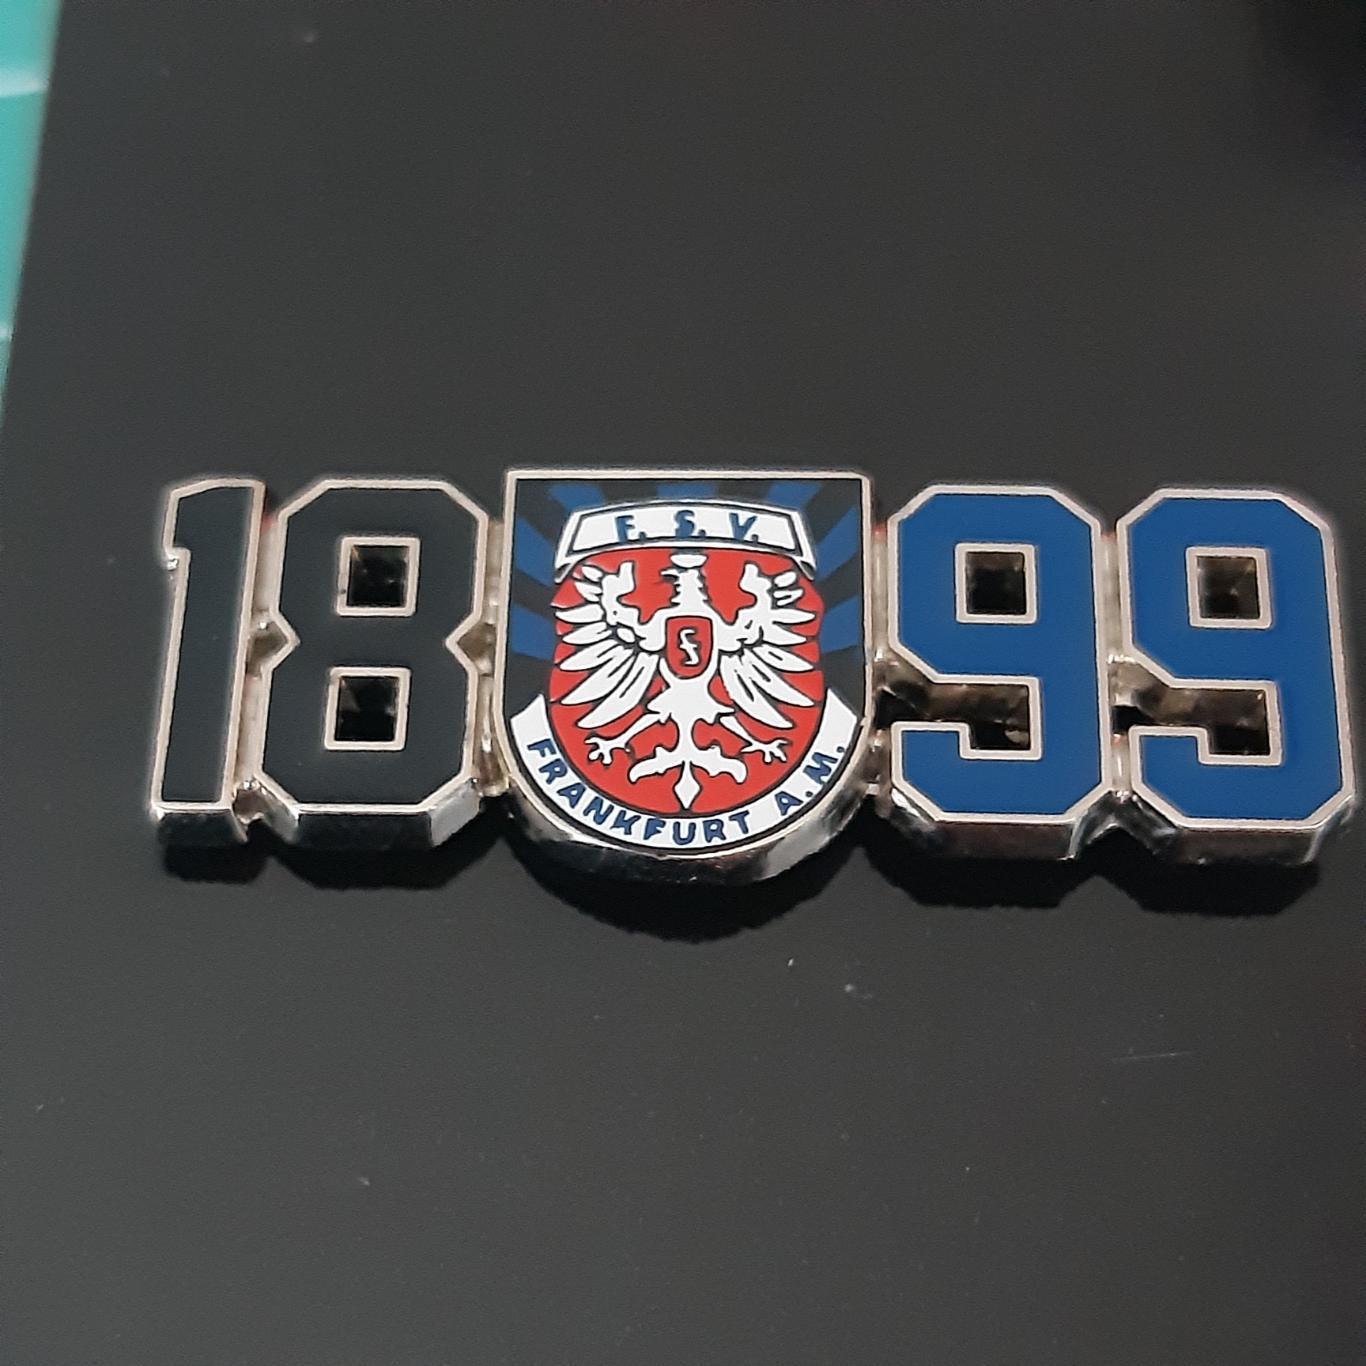 ФК Франкфурт ( FС Frankfurt ) 1899